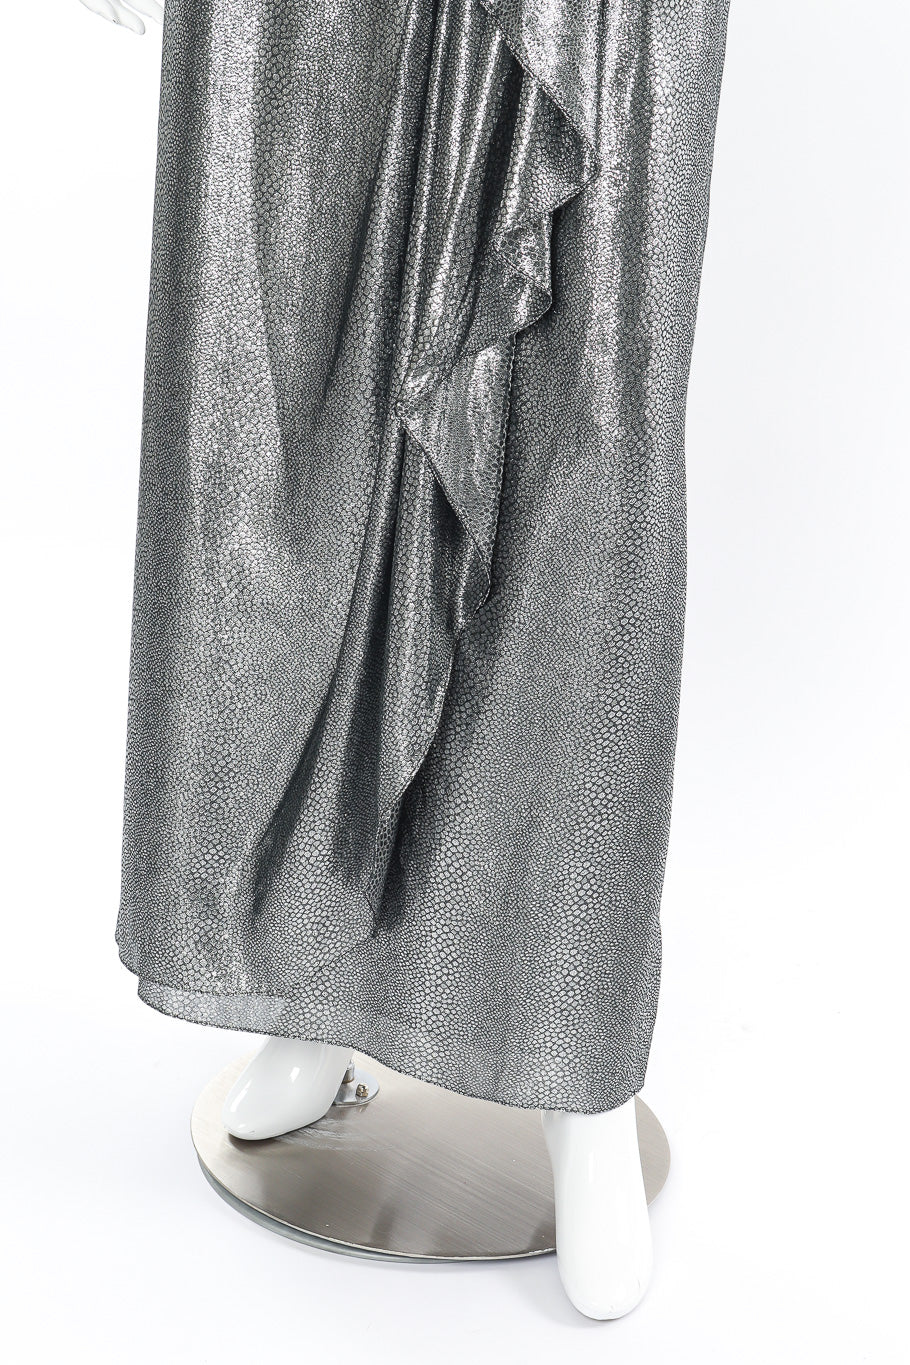 Metallic dress by Tracy Mills on mannequin hem @recessla